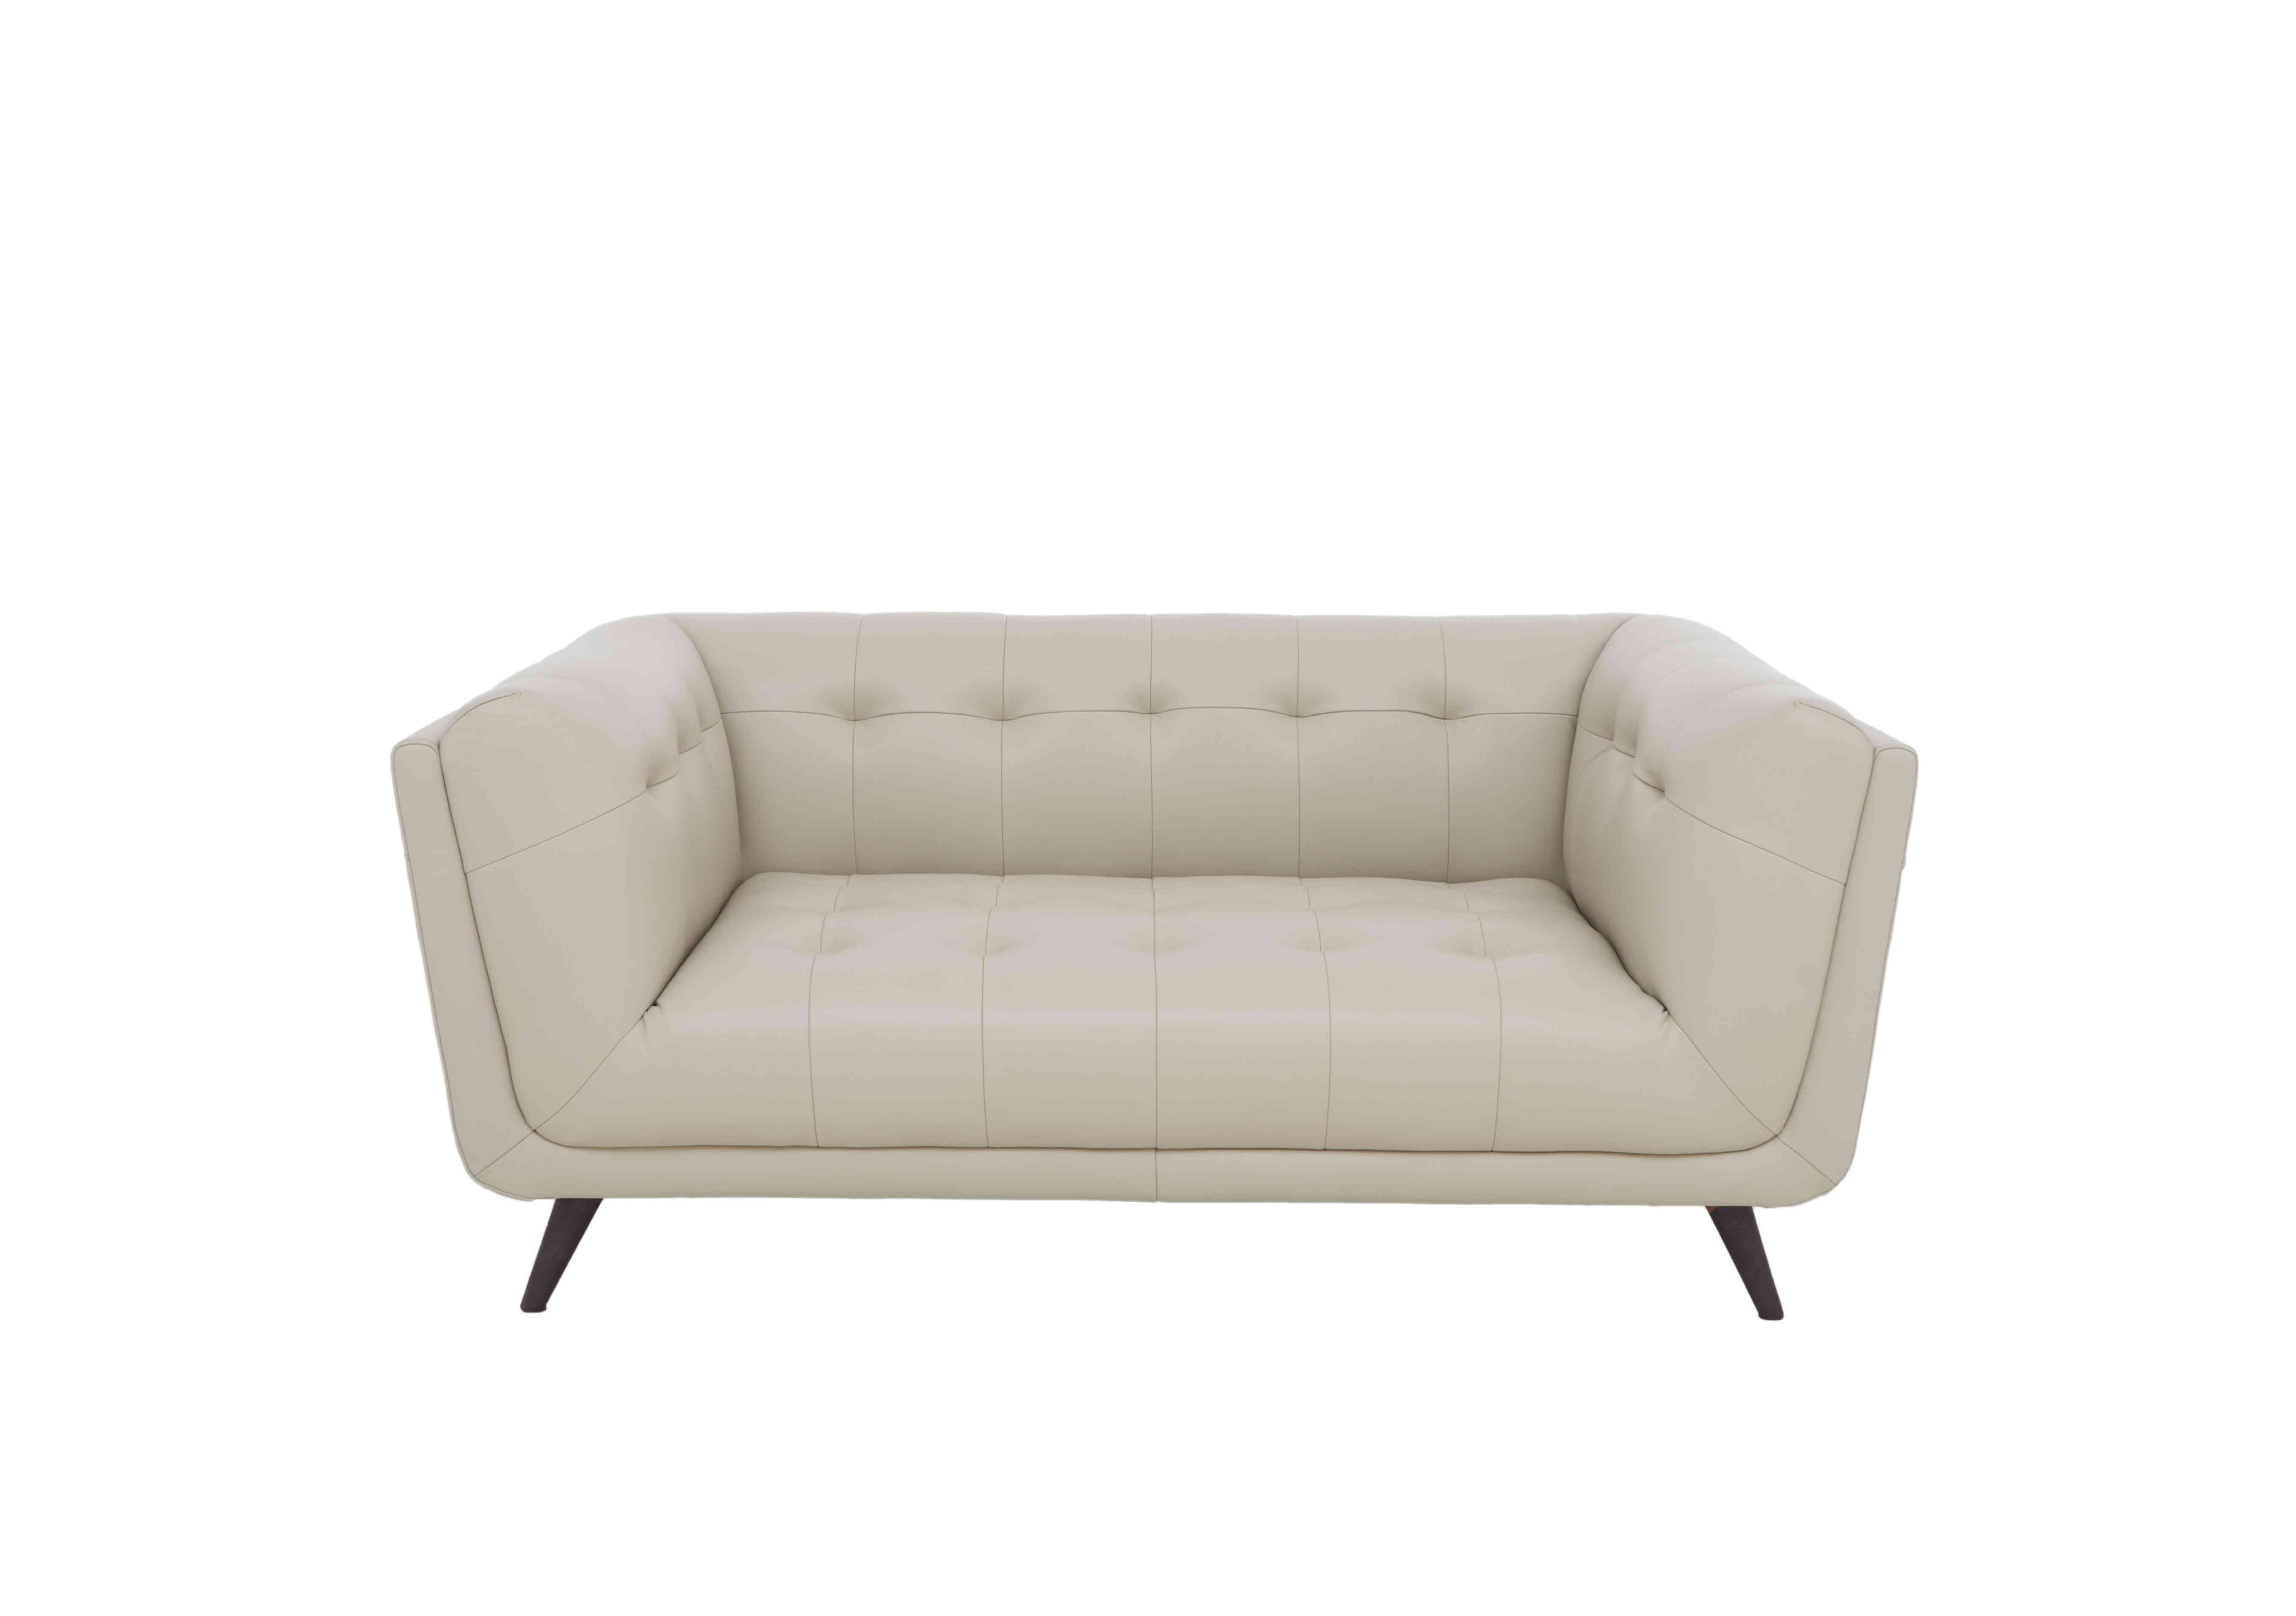 Rene 2 Seater Leather Sofa in Florida Lead Grey on Furniture Village